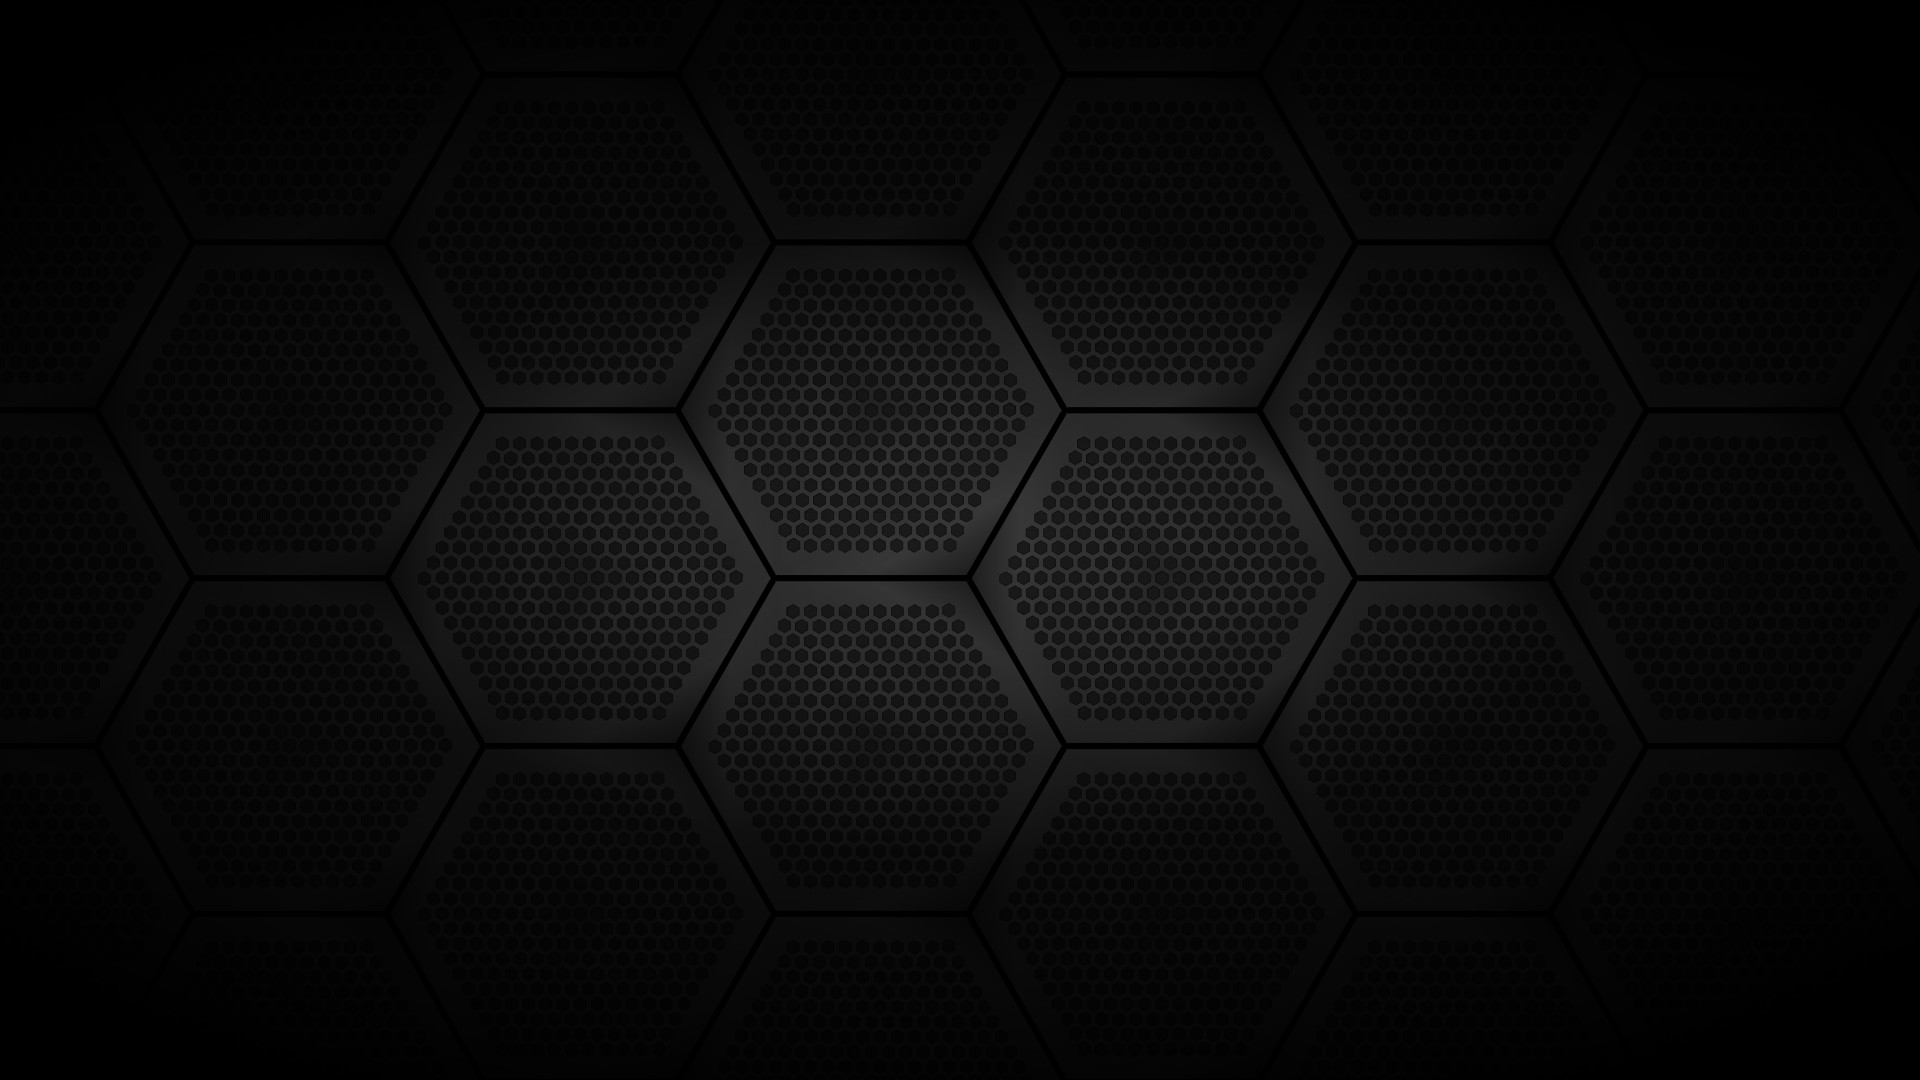 Black Theme Wallpaper 1080p Image